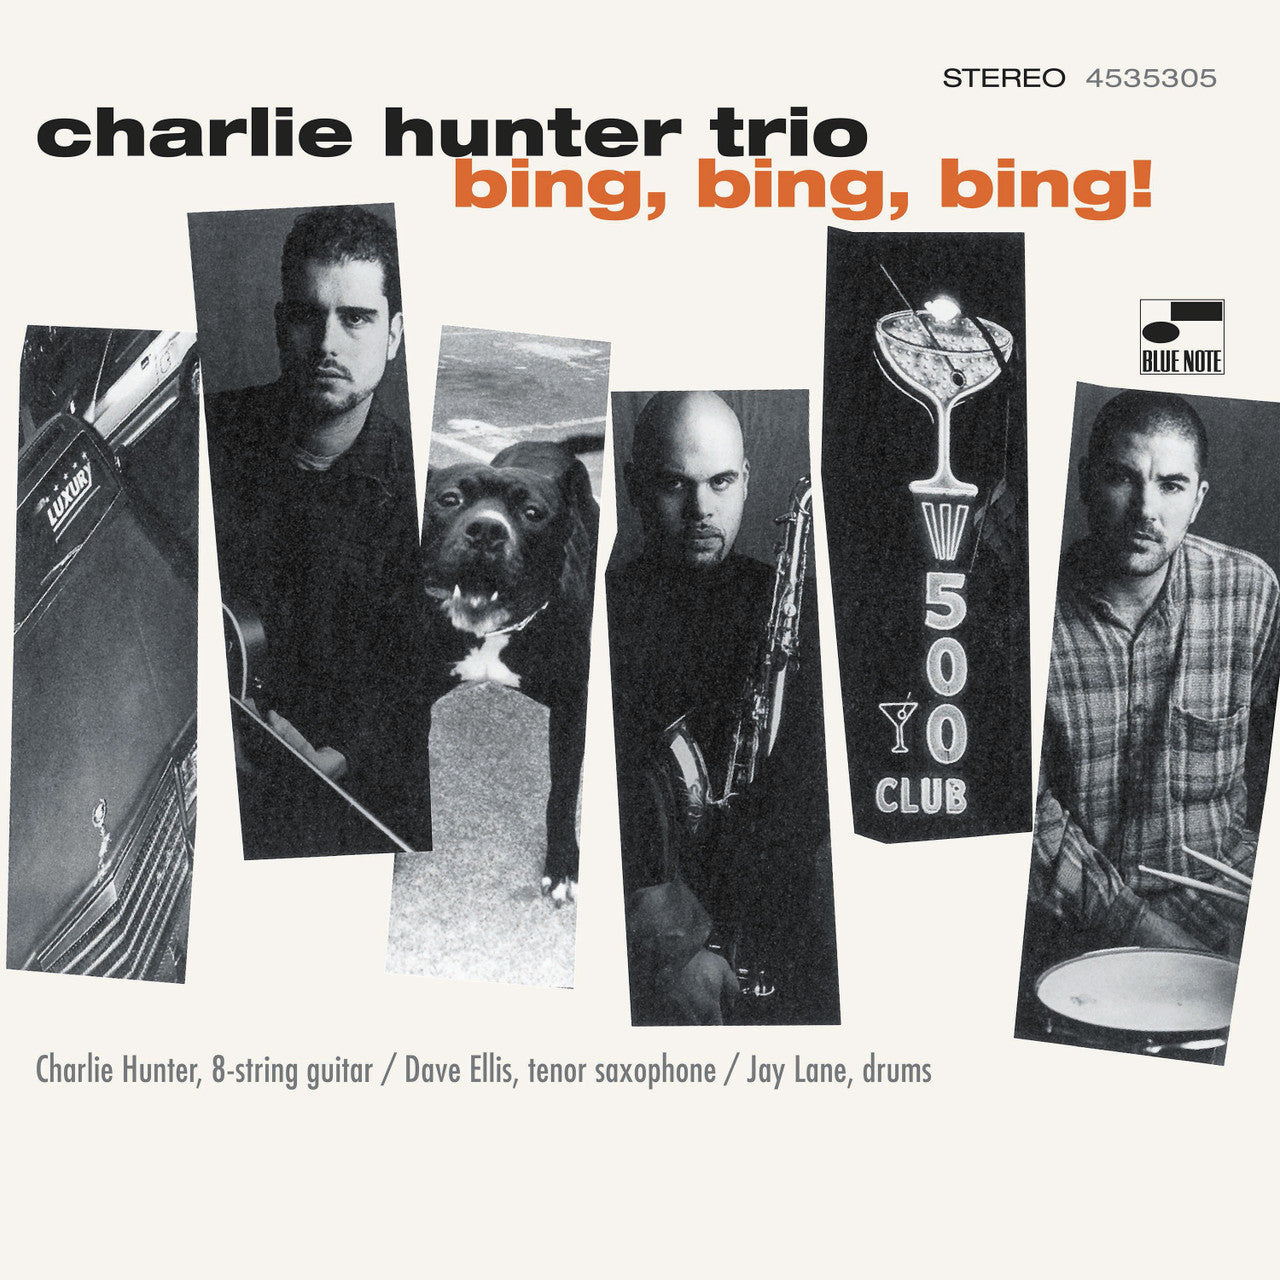 Trío de Charlie Hunter - ¡Bing, Bing, Bing! - LP clásico de nota azul 